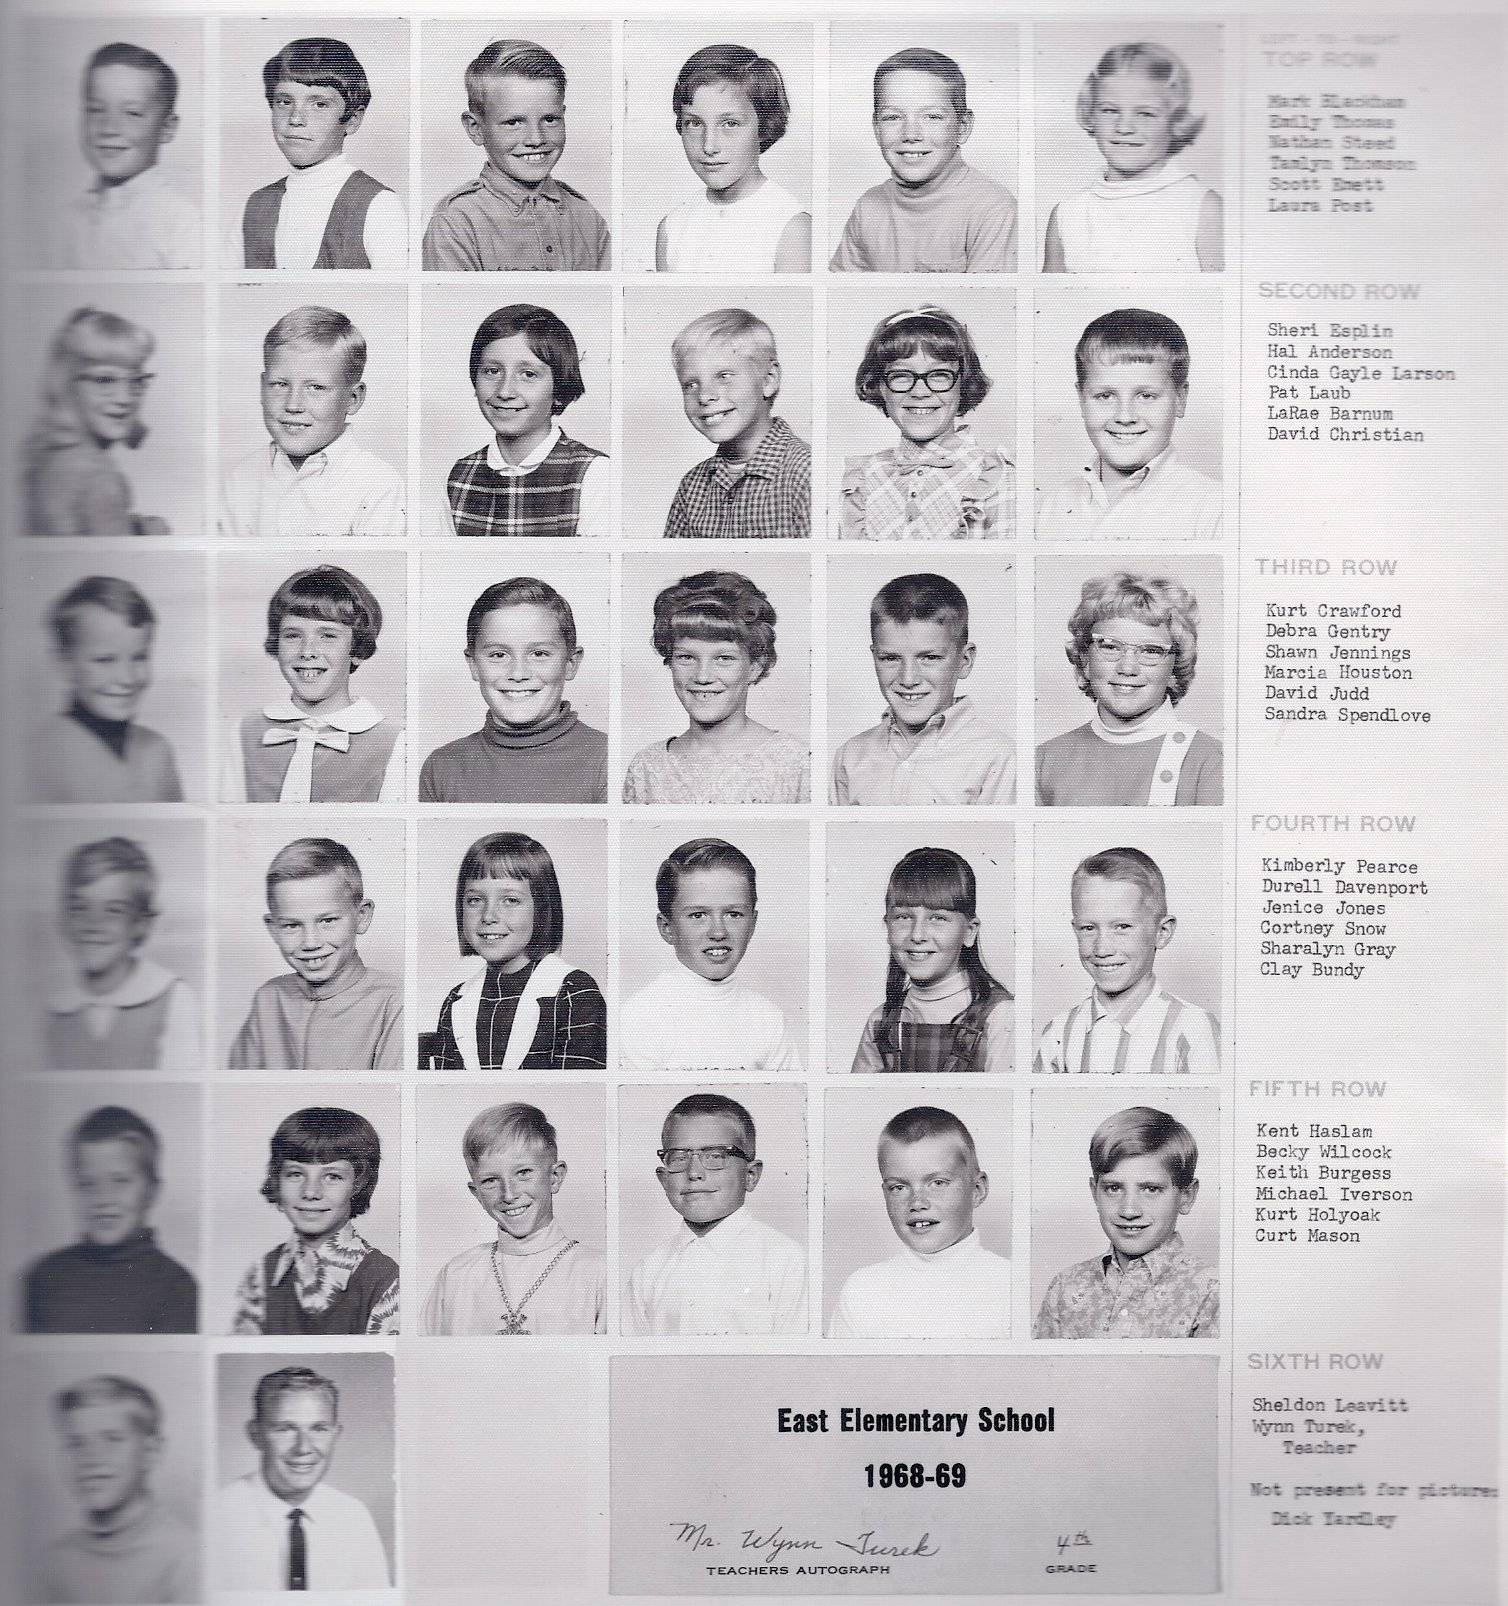 Mr. Wynn Turek's 1968-1969 fourth grade class at East Elementary School